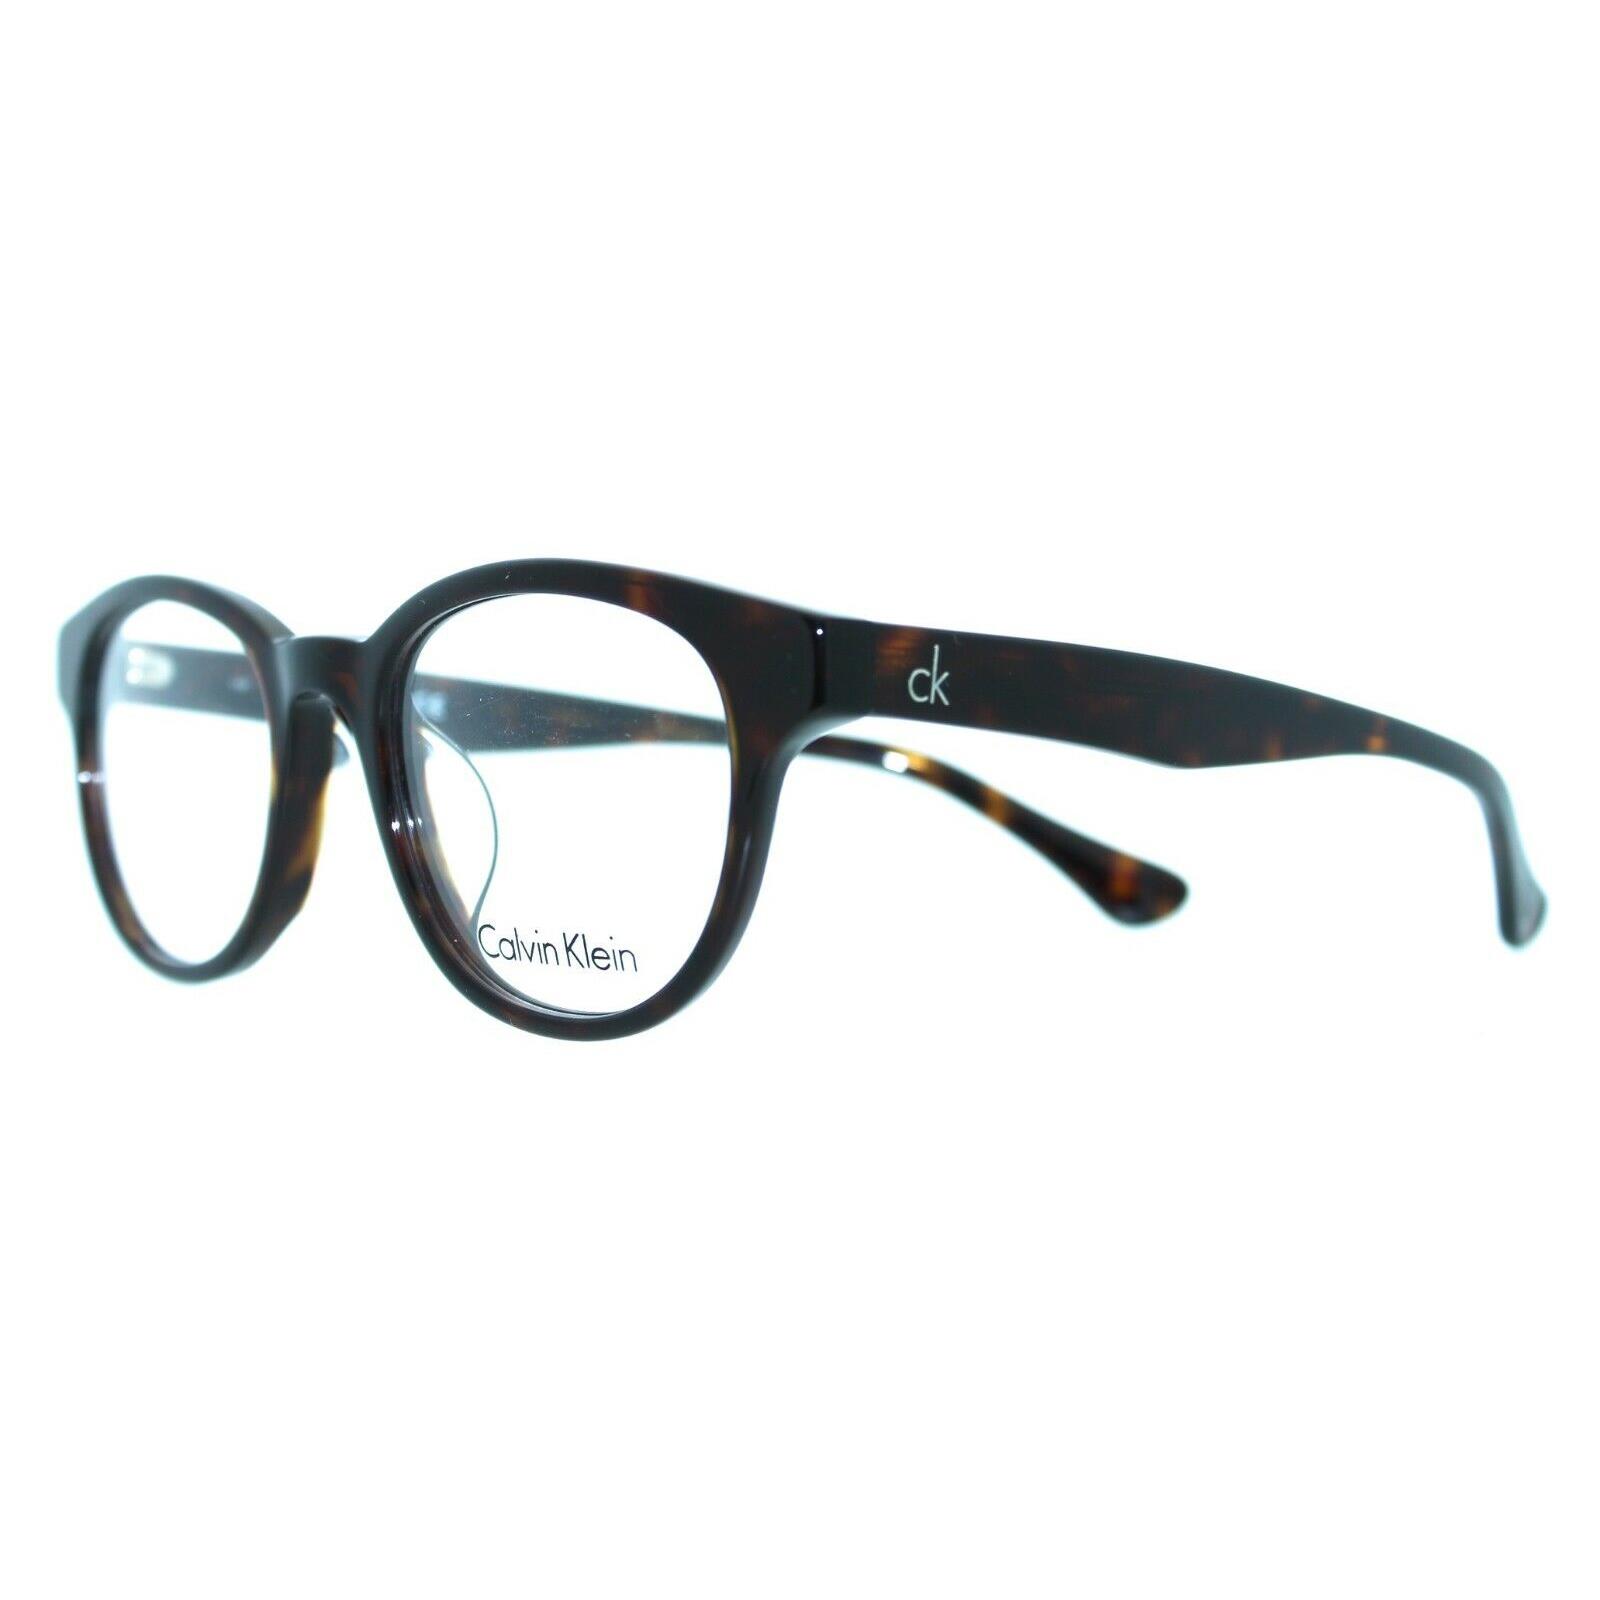 Calvin Klein - CK5902A 214 49/20 - Tortoise - Men Women Eyeglasses ...